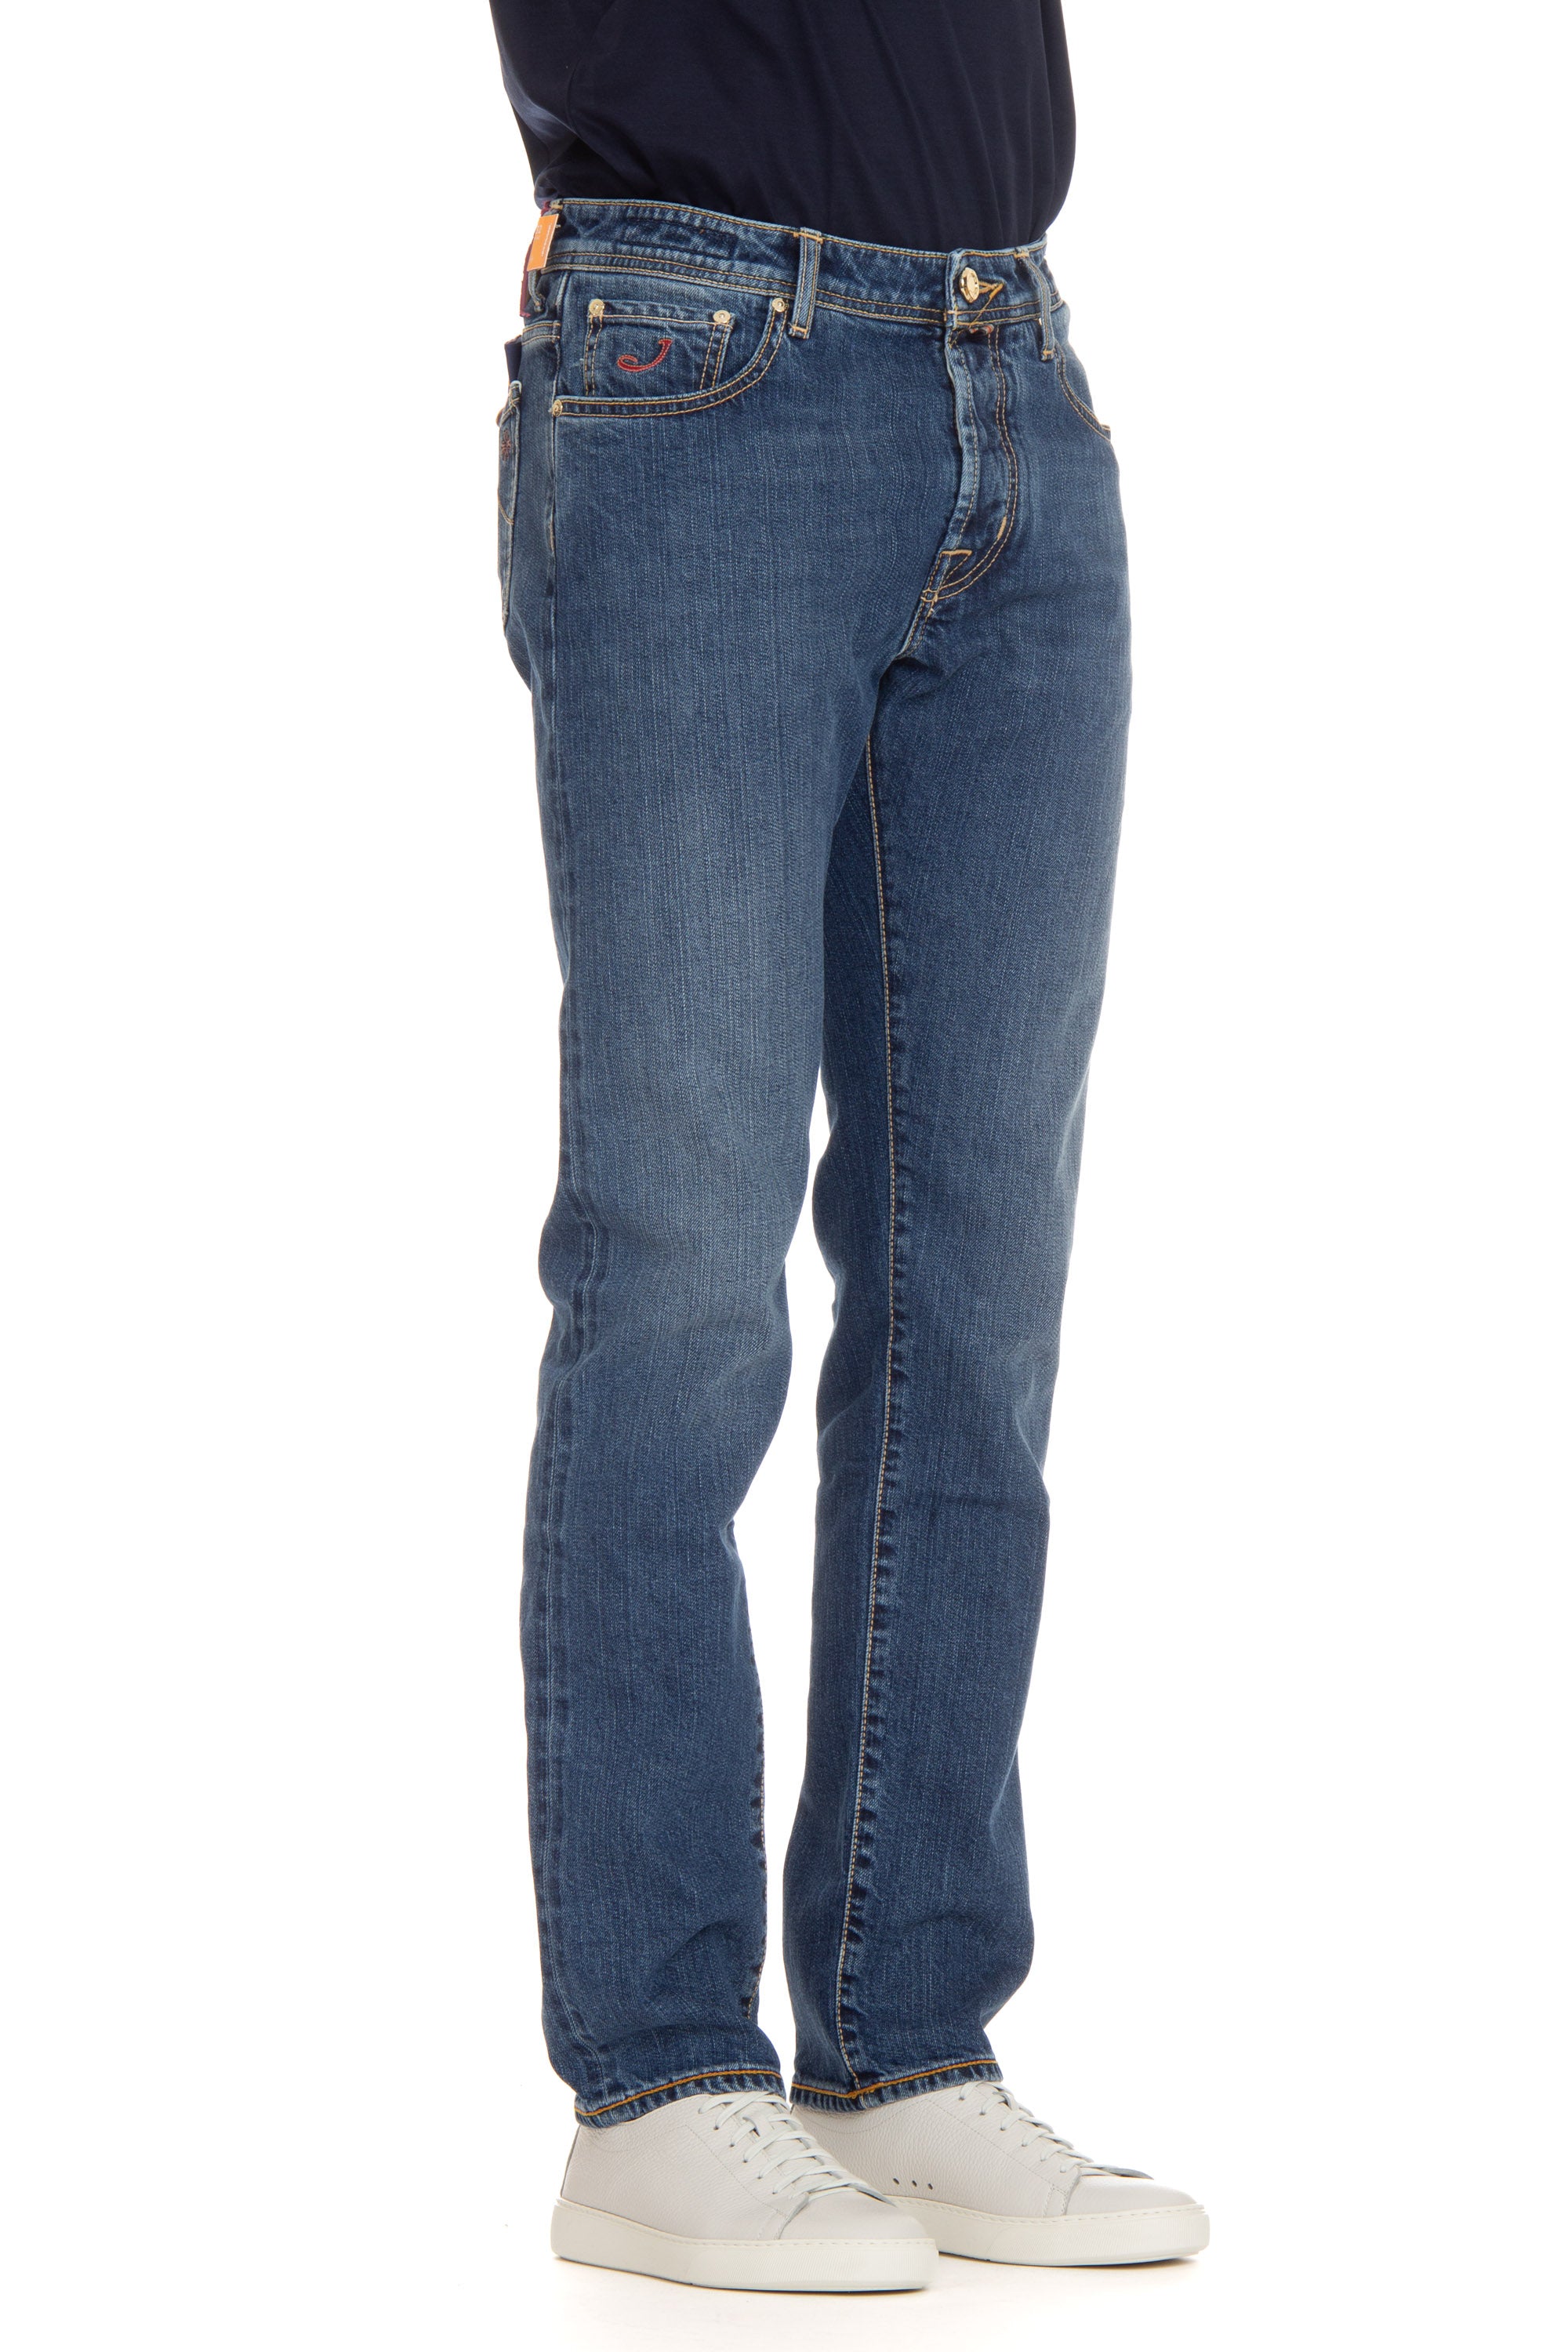 Jeans Limited Edition etichetta fucsia Bard fit